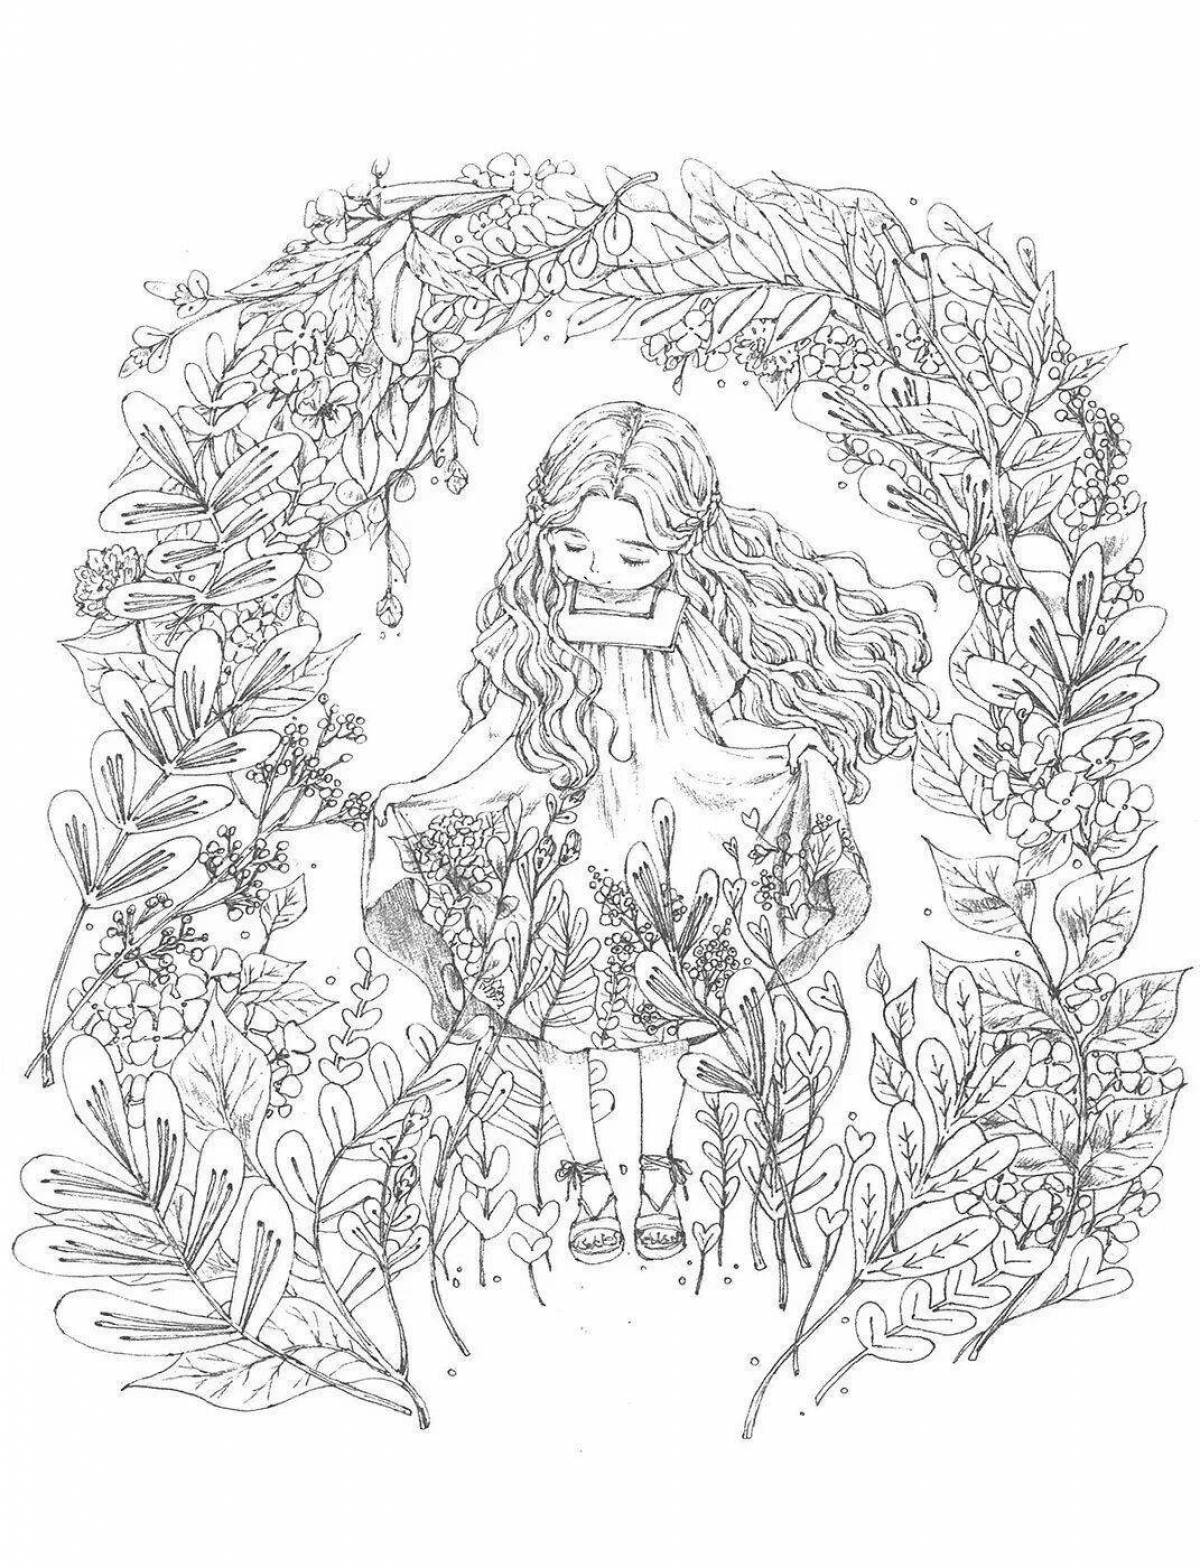 Coloring radiant aeppol forest girl